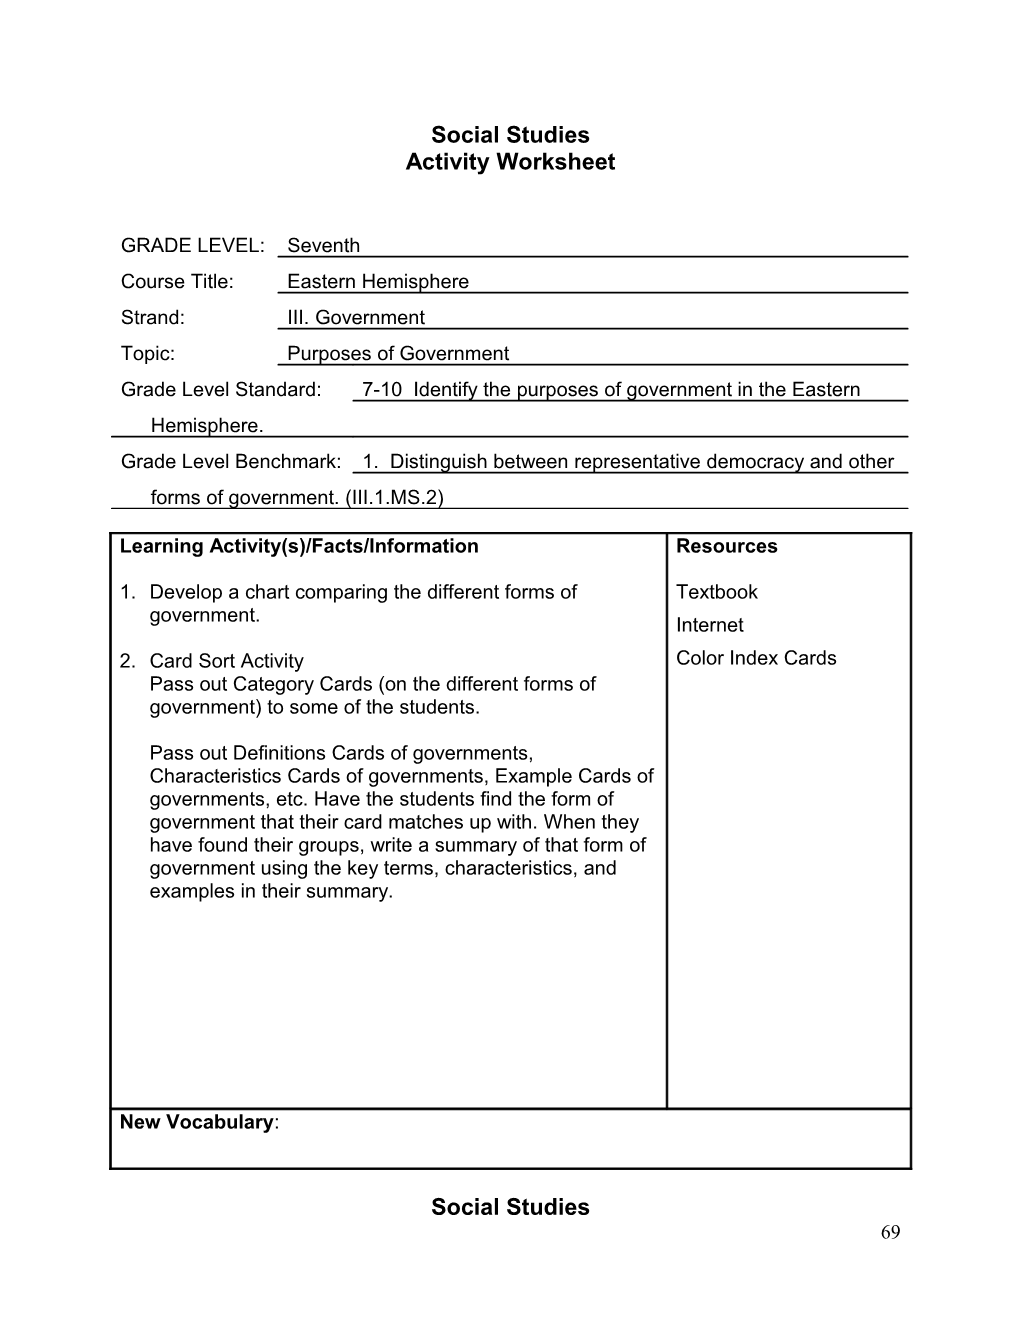 Activity Worksheet s2